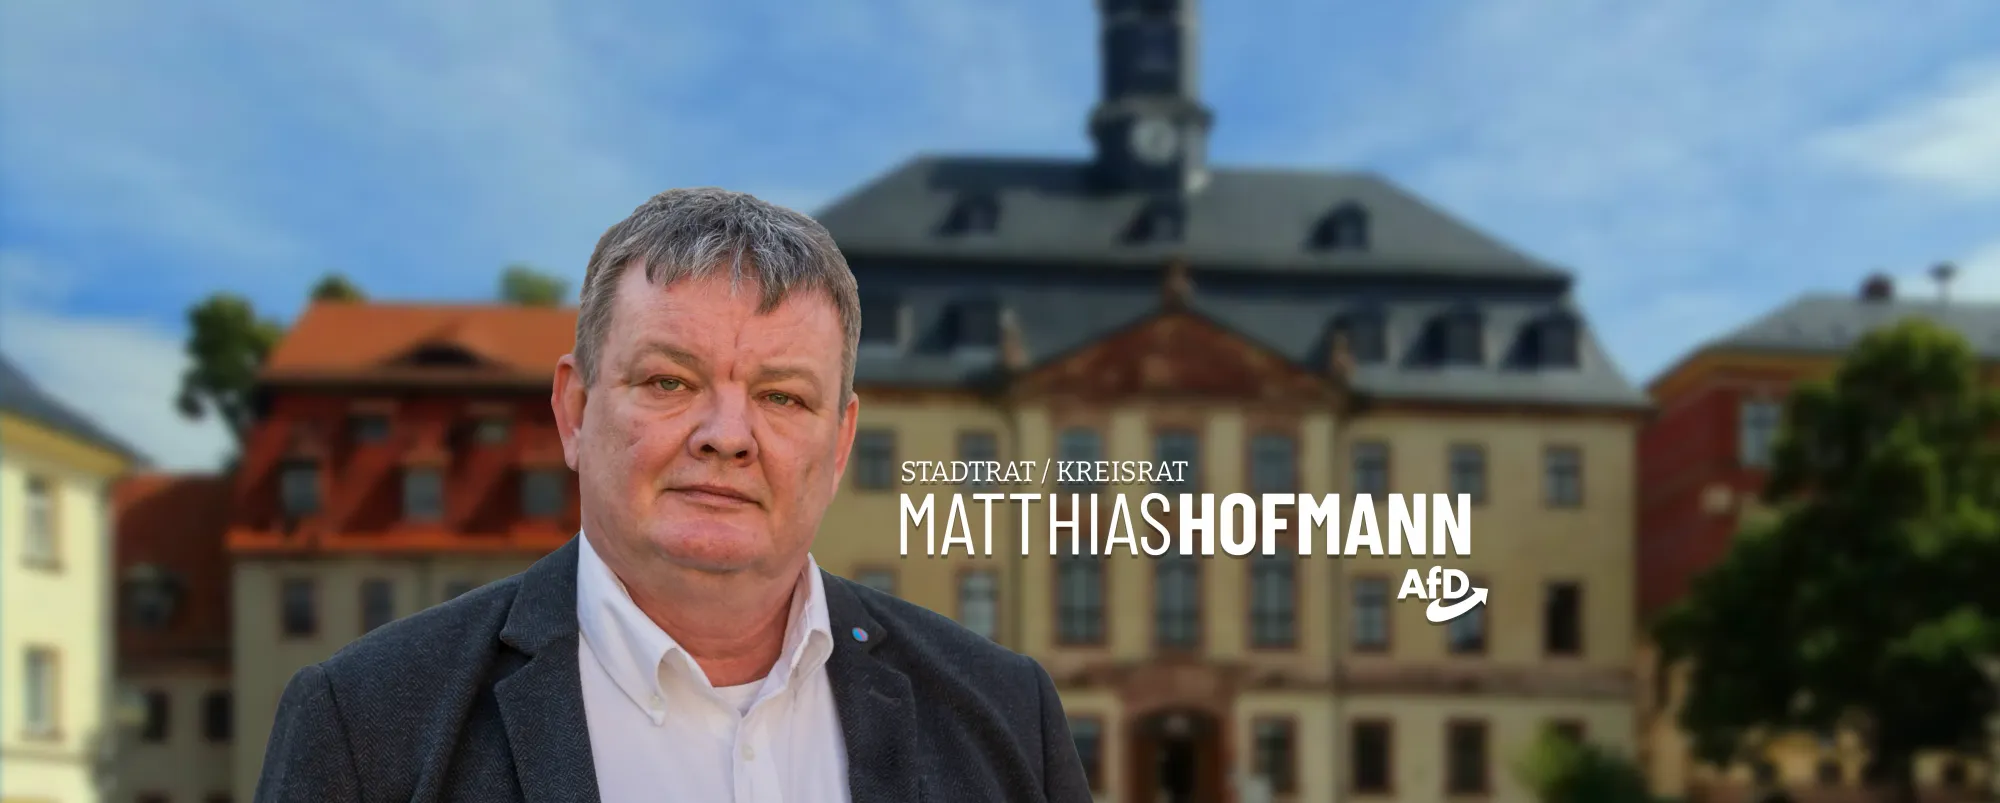 Matthias Hofmann - Stadtrat / Kreisrat Burgstädt